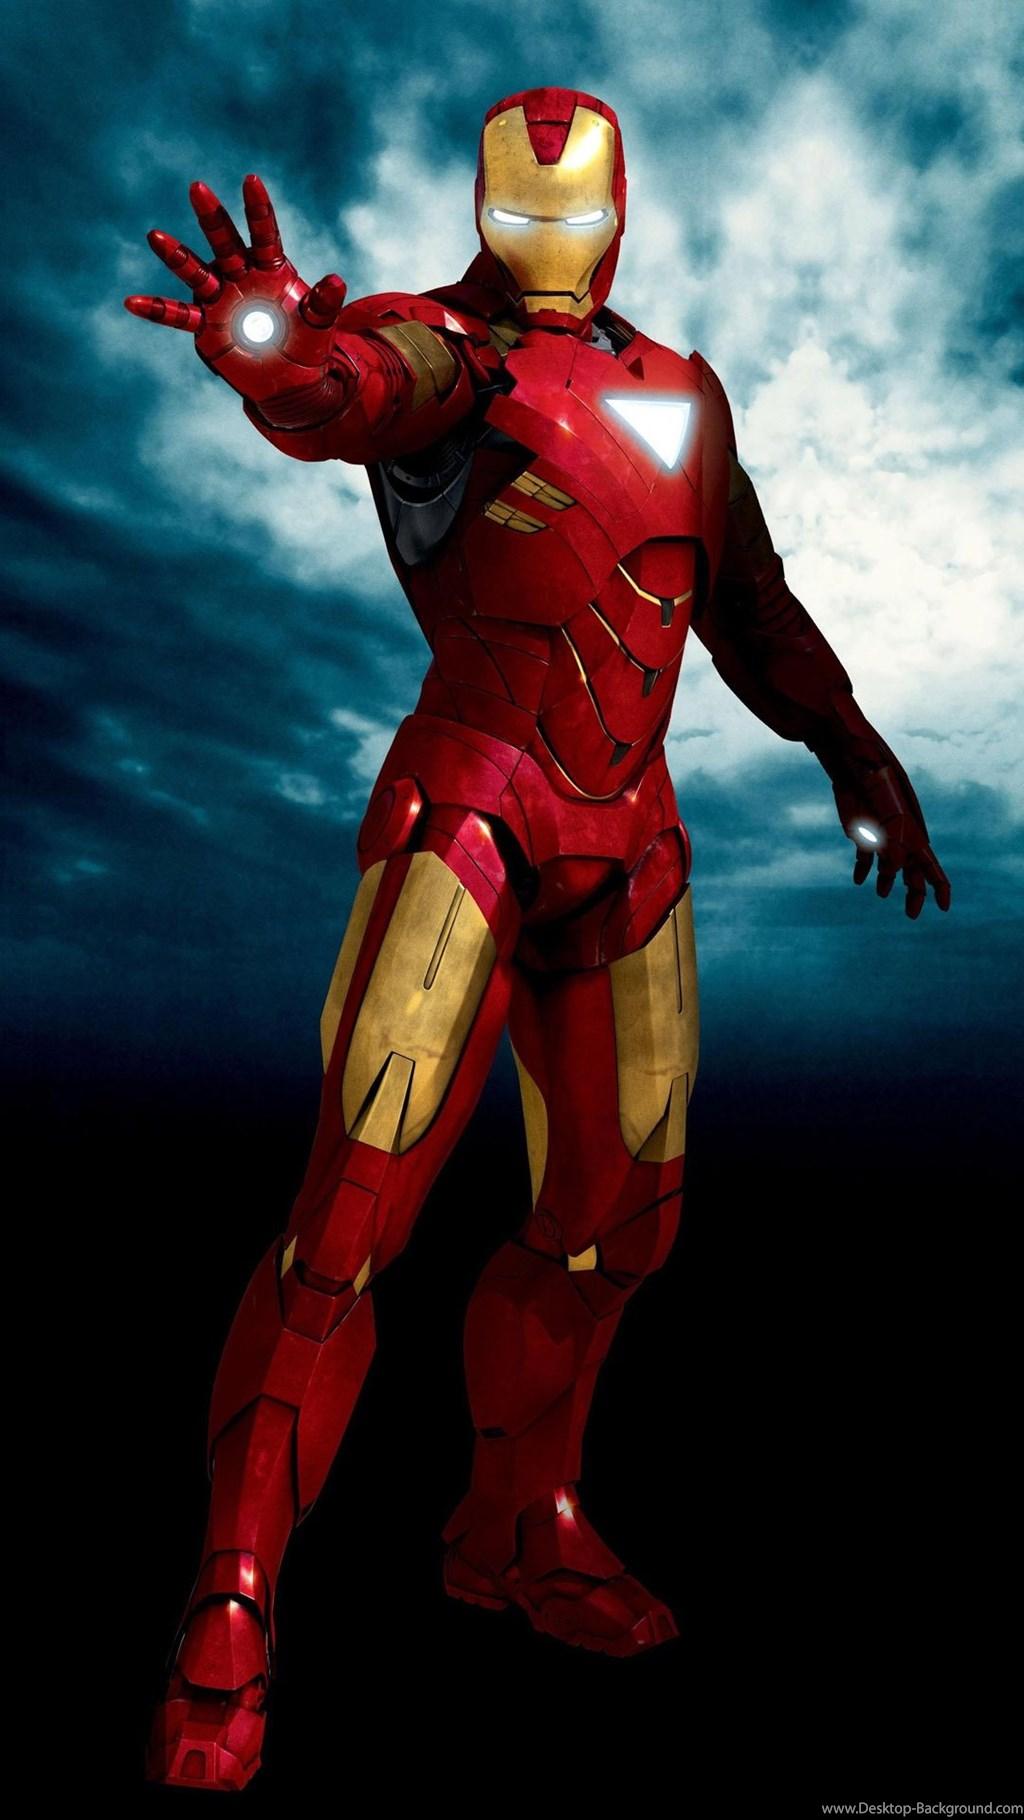 Iron man android wallpaper 1080x1920 iron man movie mobile wallpaper